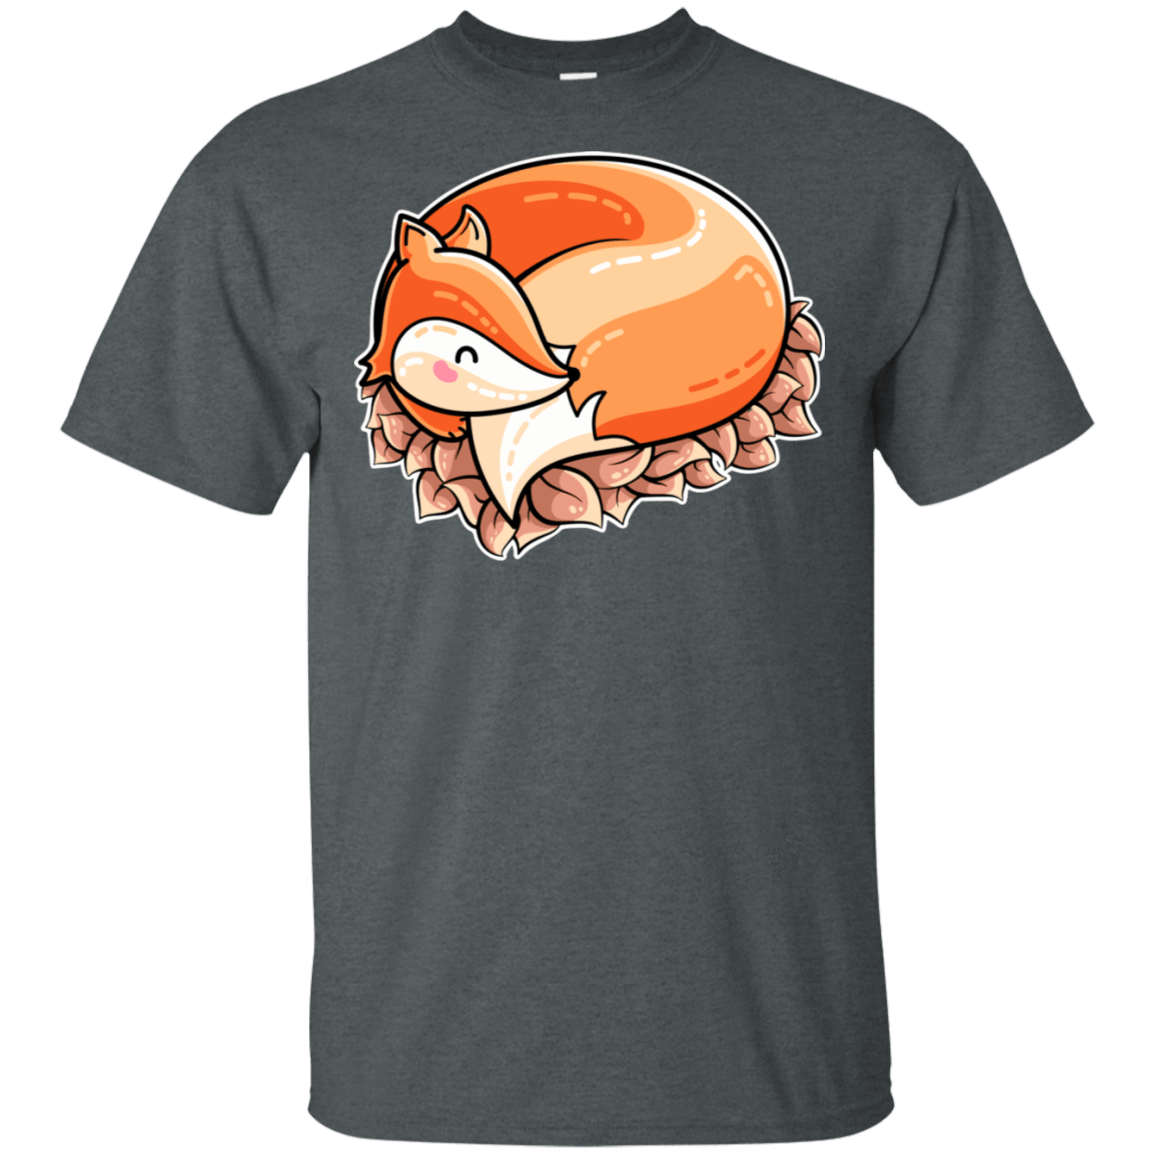 T-Shirts Dark Heather / S Curled Fox T-Shirt